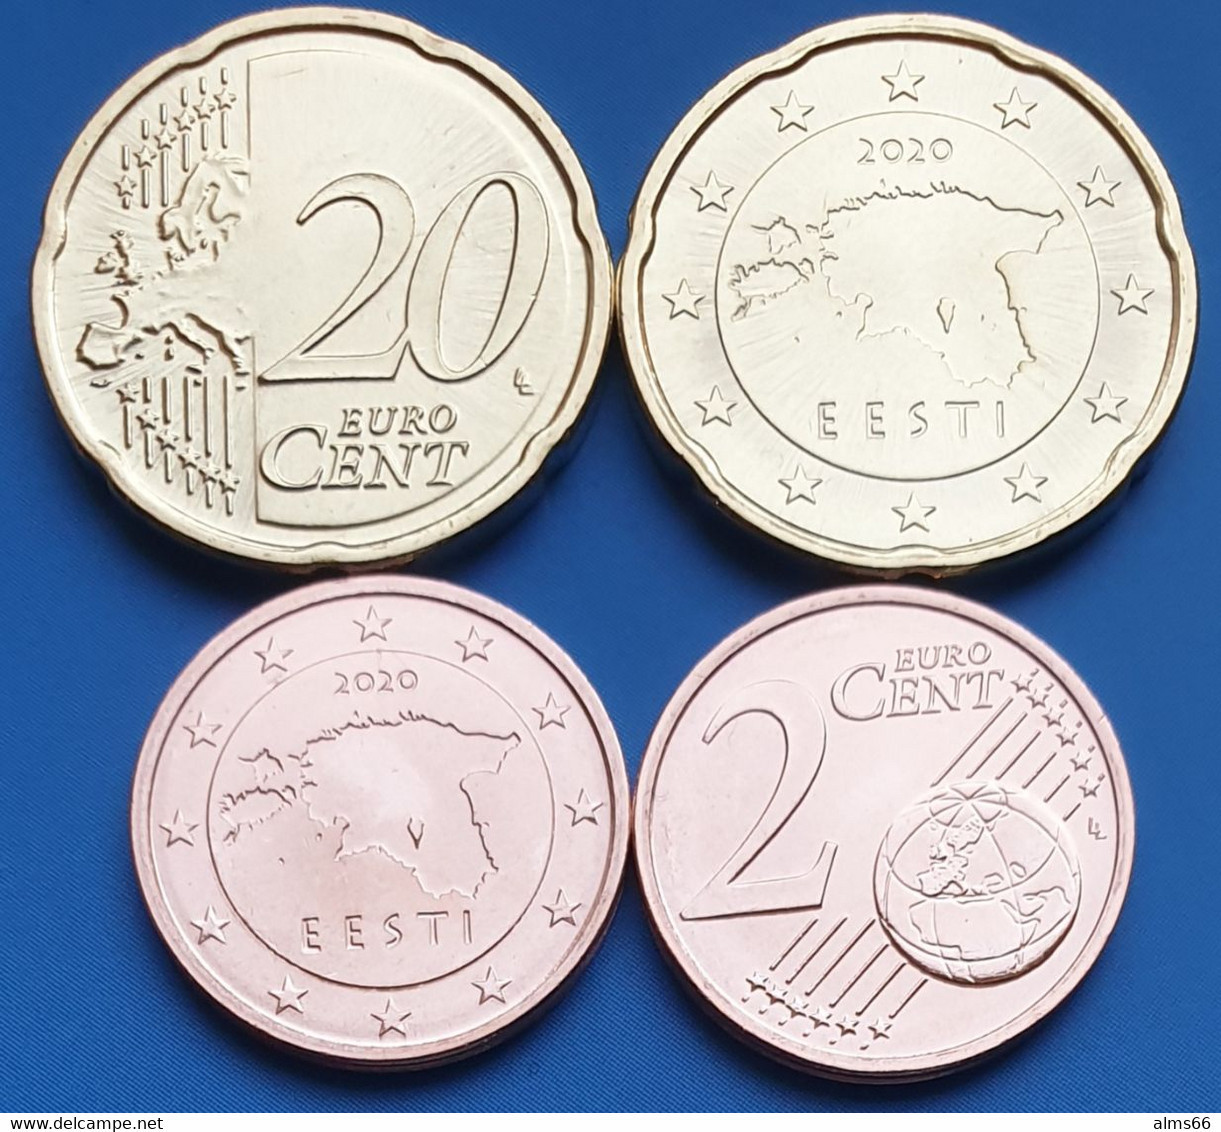 Eurocoins Estonia 2 + 20 Cents 2020 UNC ( Set 2 Coins) - Estonia